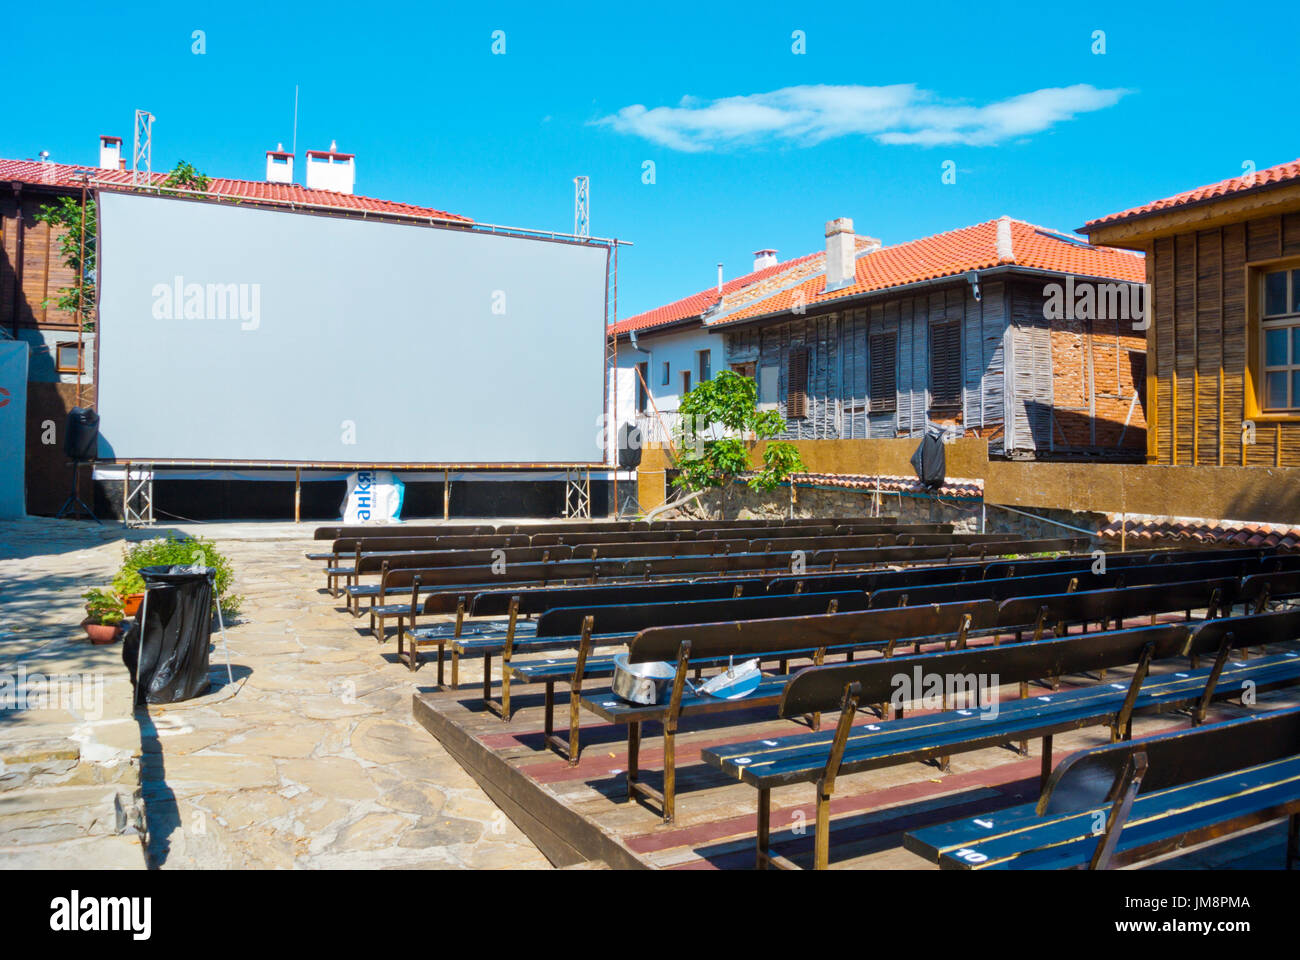 Kino letna, summertime cinema, vieille ville, Sozopol, Bulgarie Banque D'Images